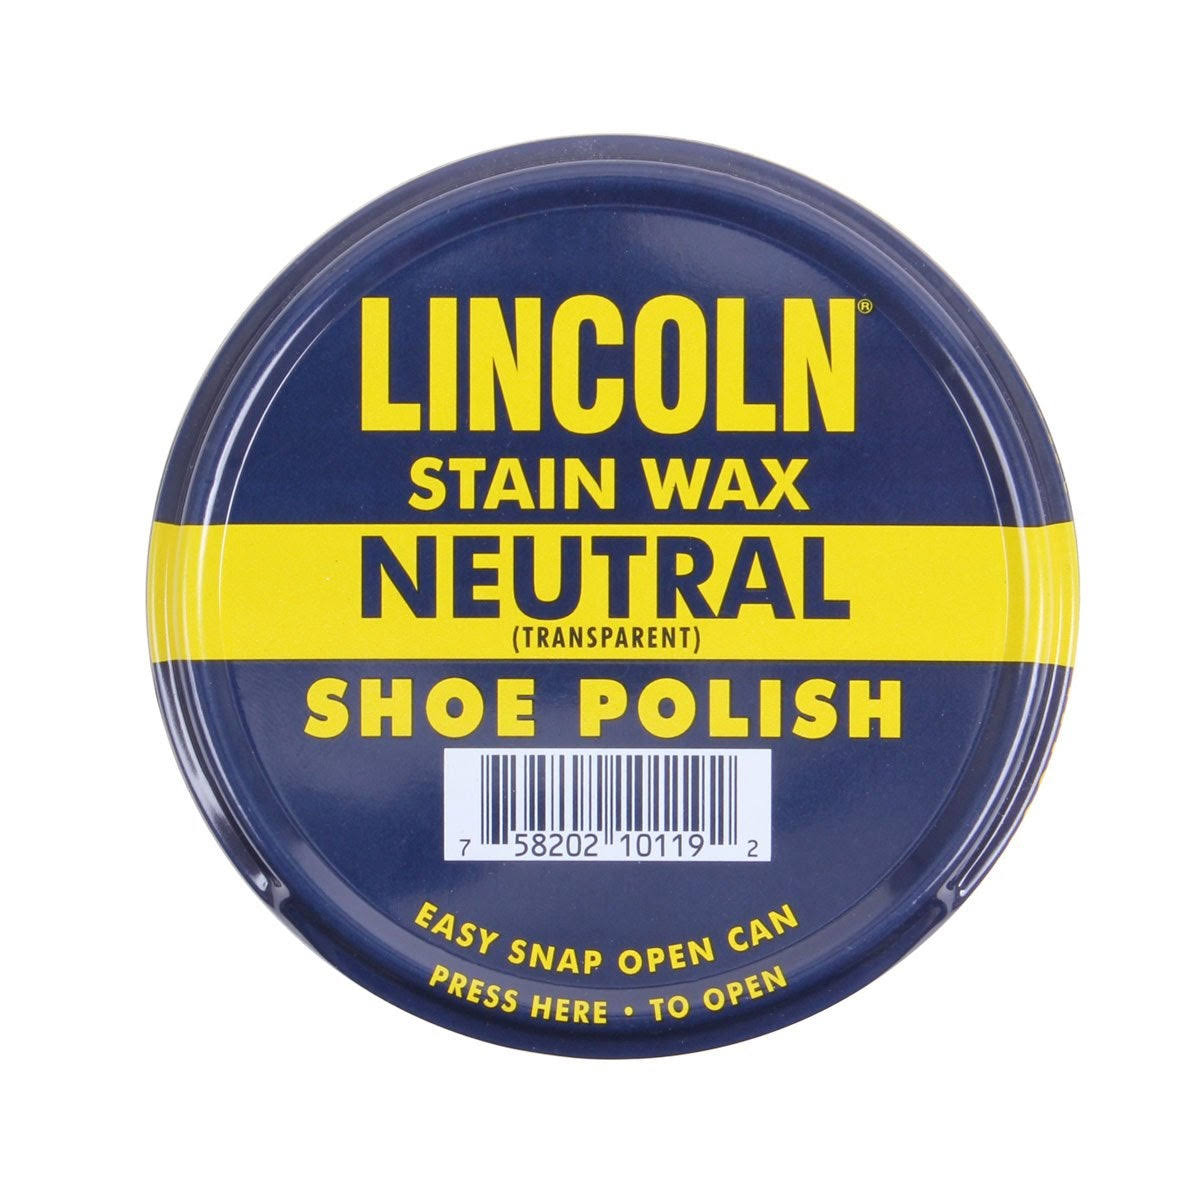 Lincoln Stain Wax Shoe Polish - Neutral